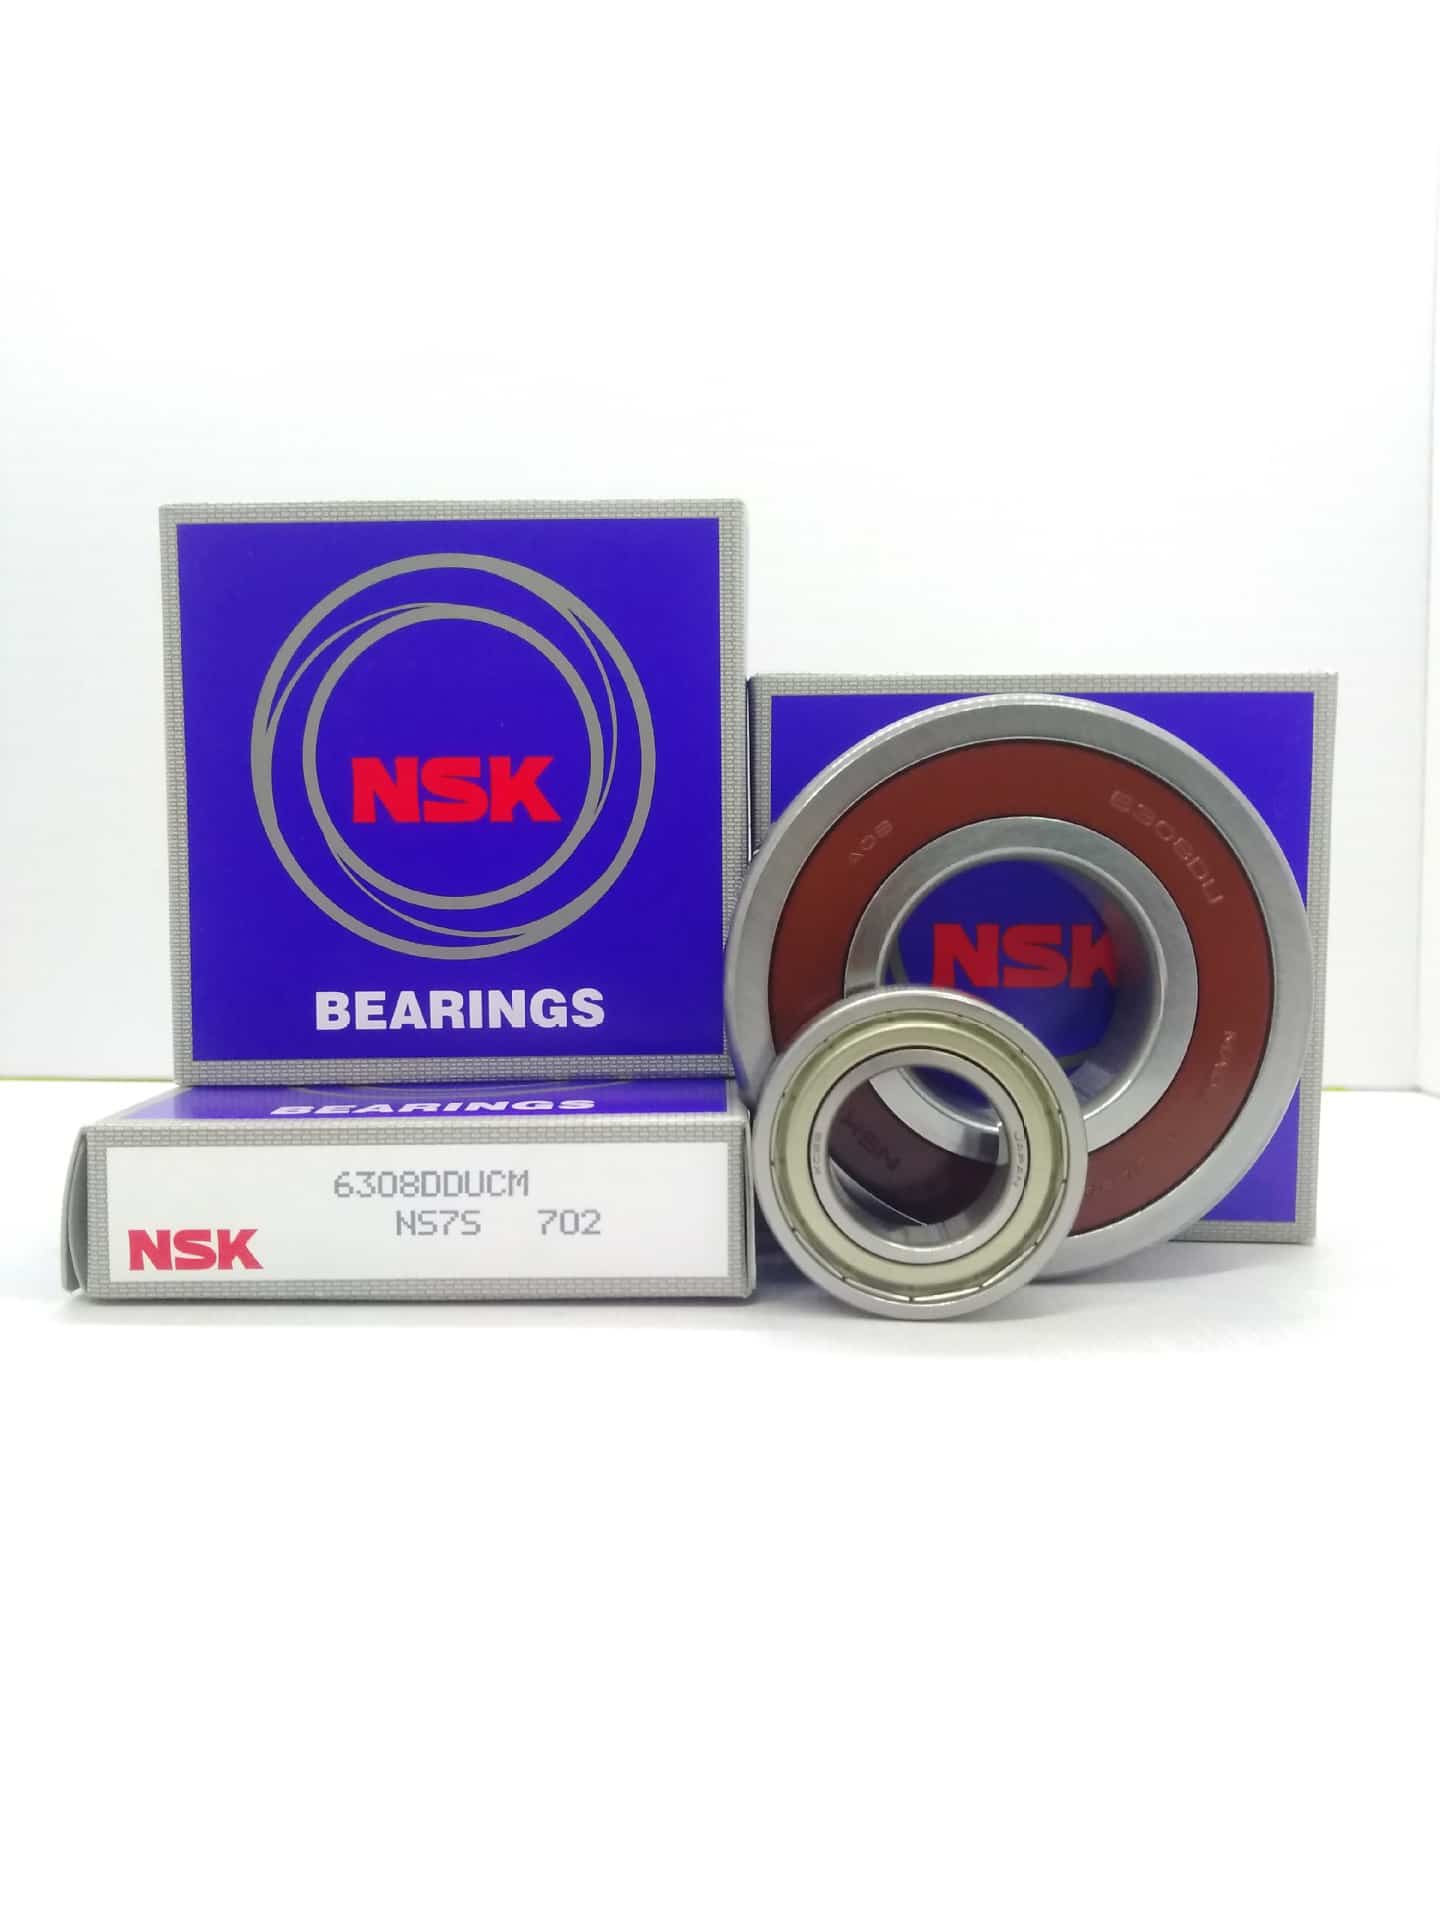 Original 6004 2RS Japan NSK High Quality ball bearing manufacturer